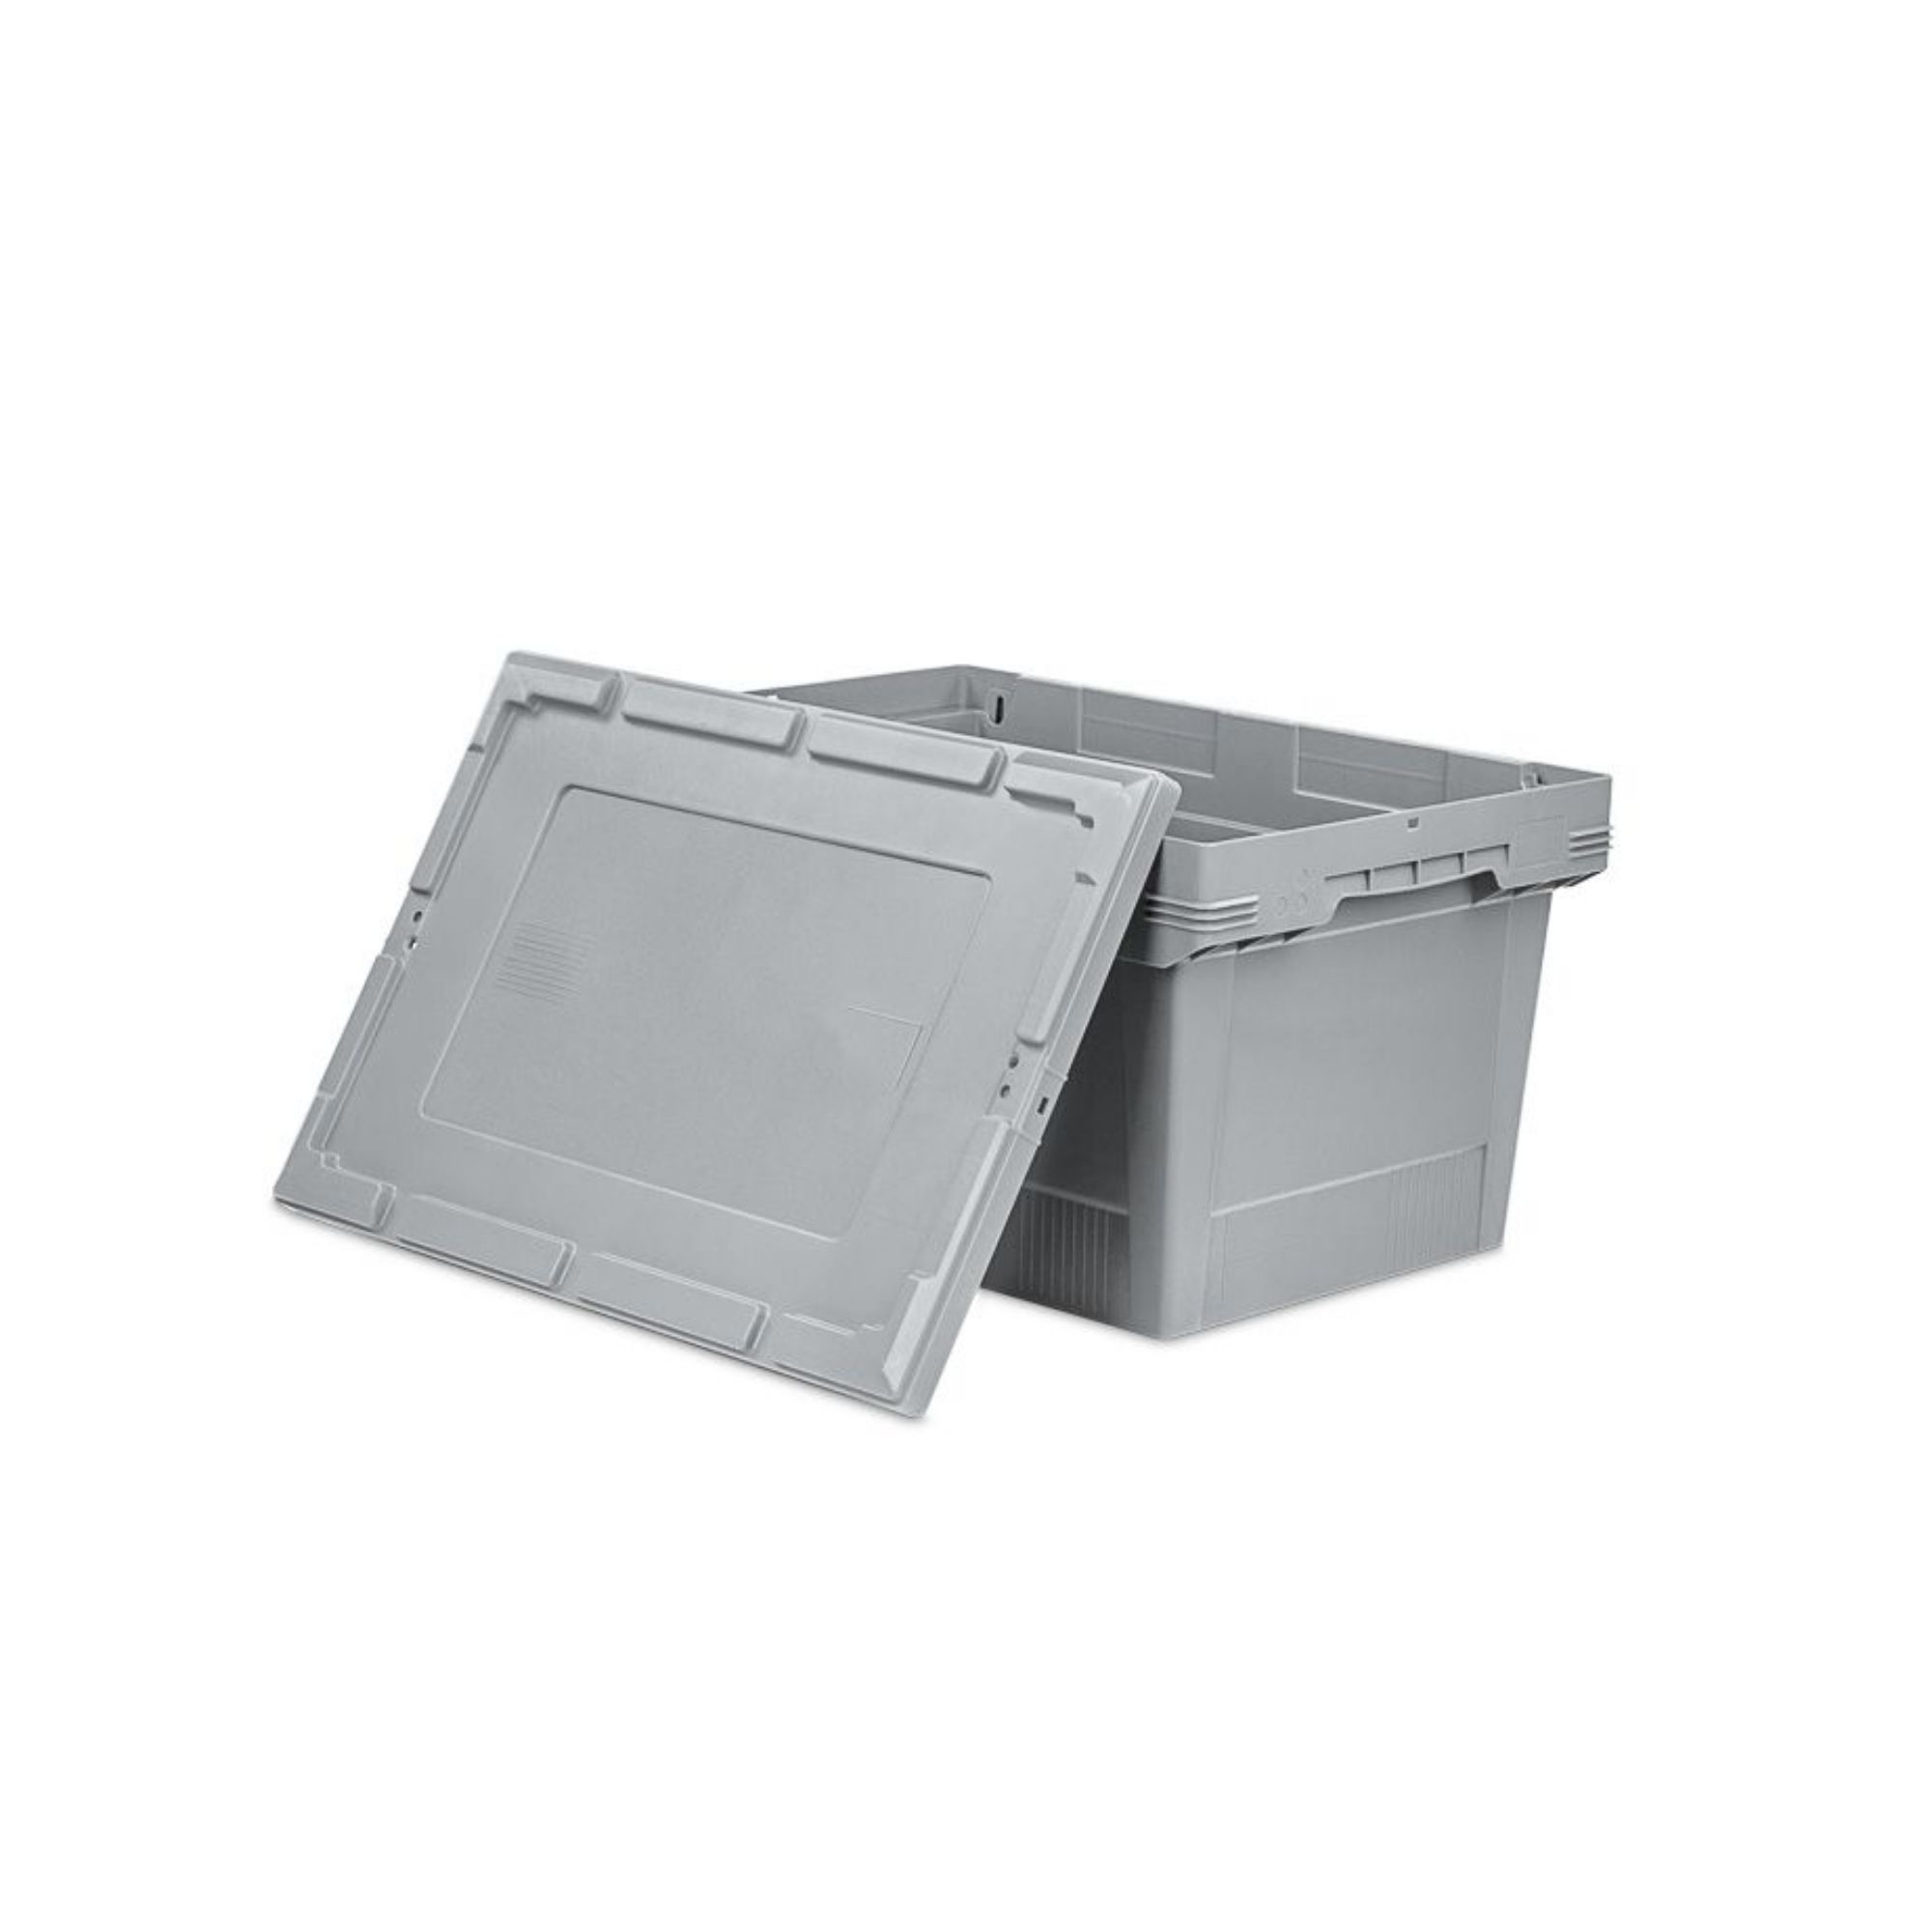 SparSet 5x Conical Mehrweg-Stapelbehälter Grau | HxBxT 32,3x40x60cm | 58 Liter | Lagerbox Eurobox Transportbox Transportbehälter Stapelbehälter